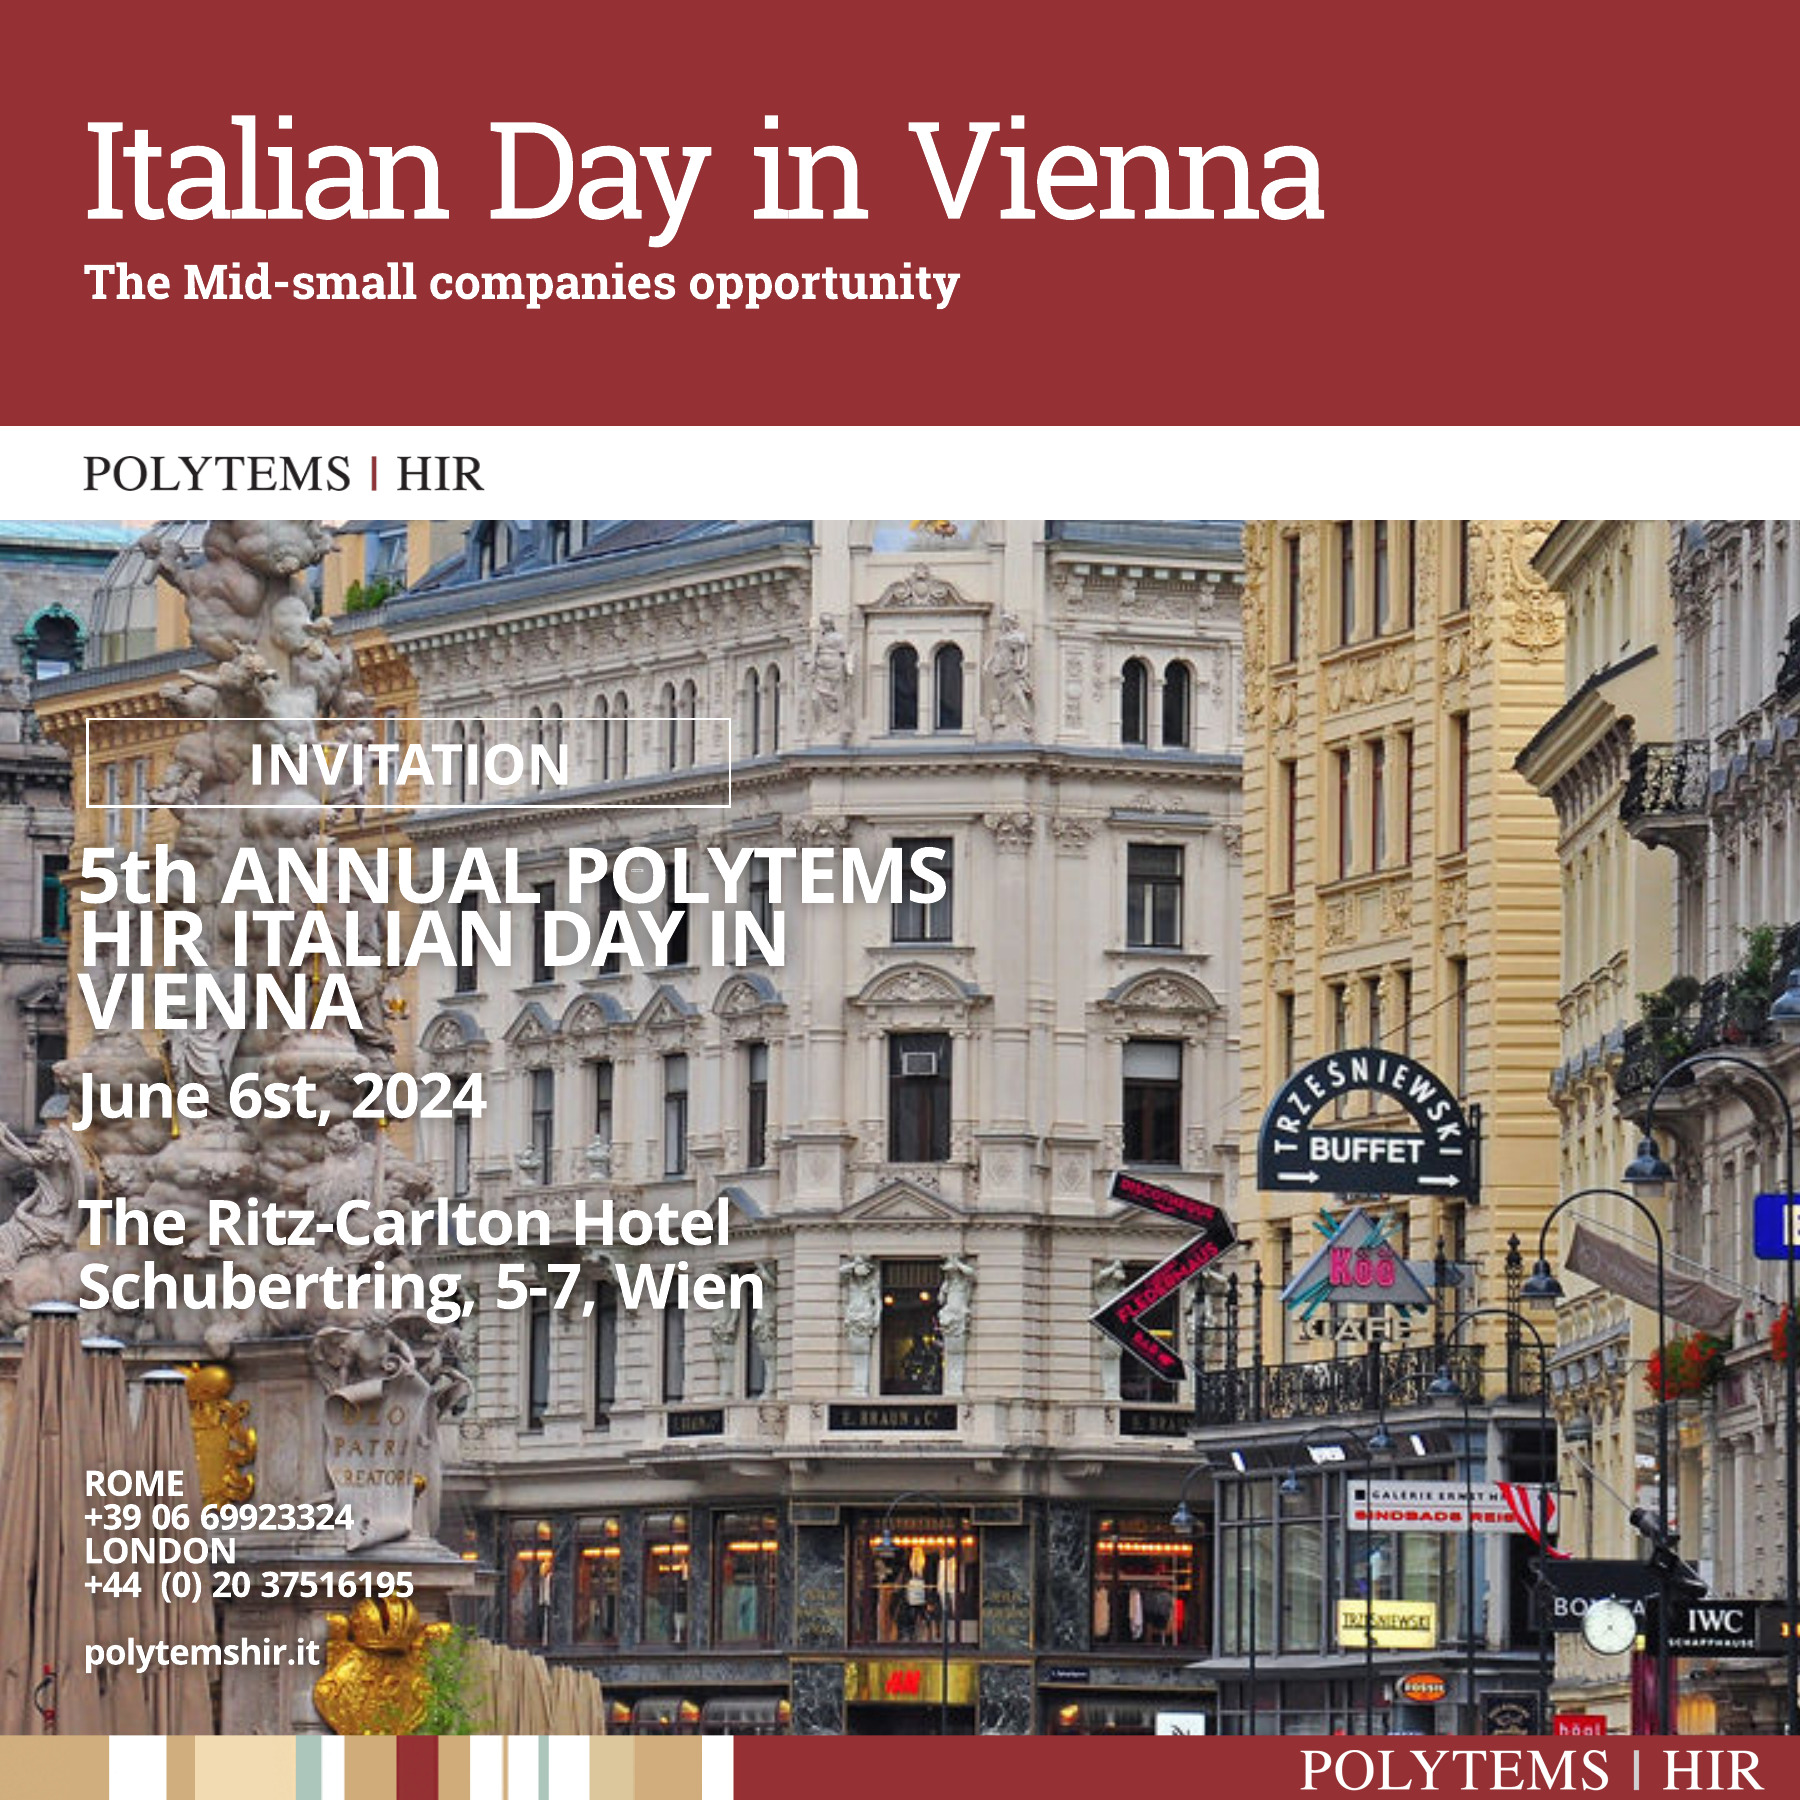 10_ITALIAN DAY_VIENNA_INVITATION_INVESTORS